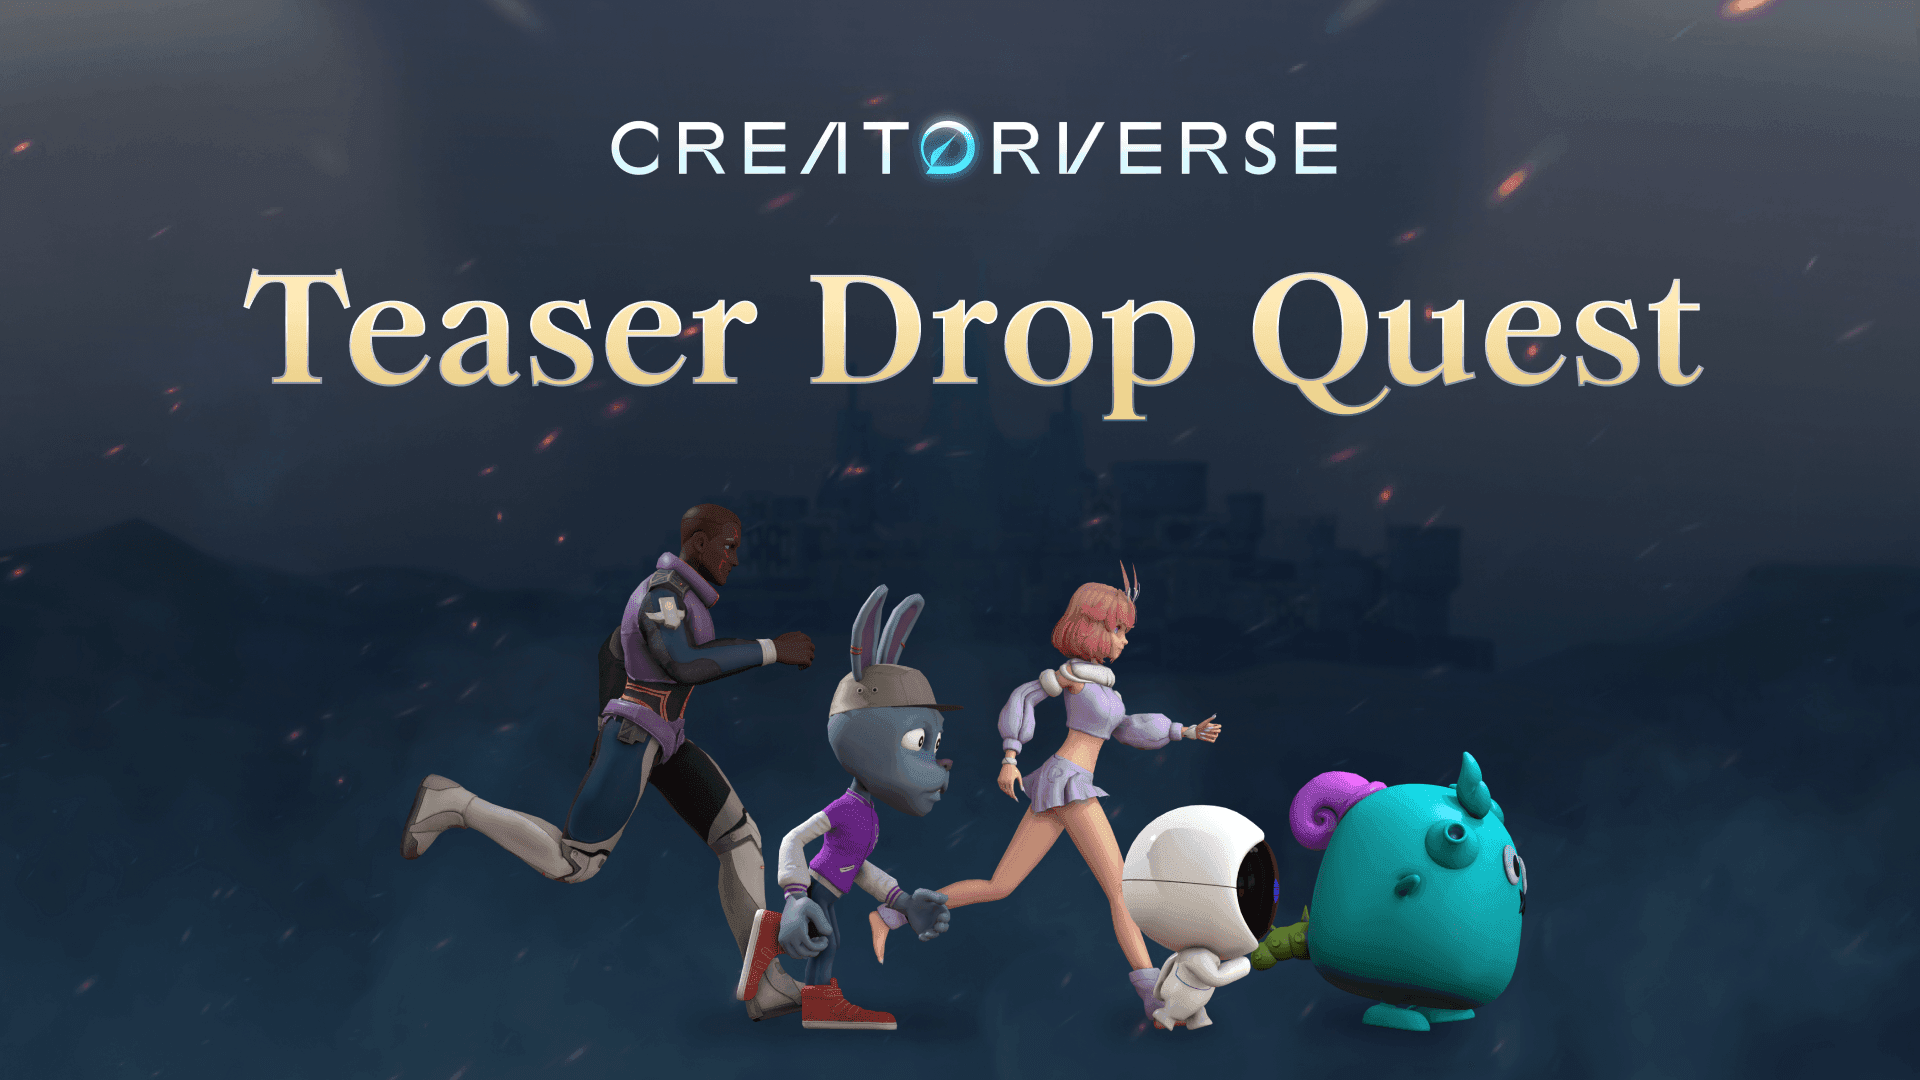 Creatorverse's Teaser Drop Quest